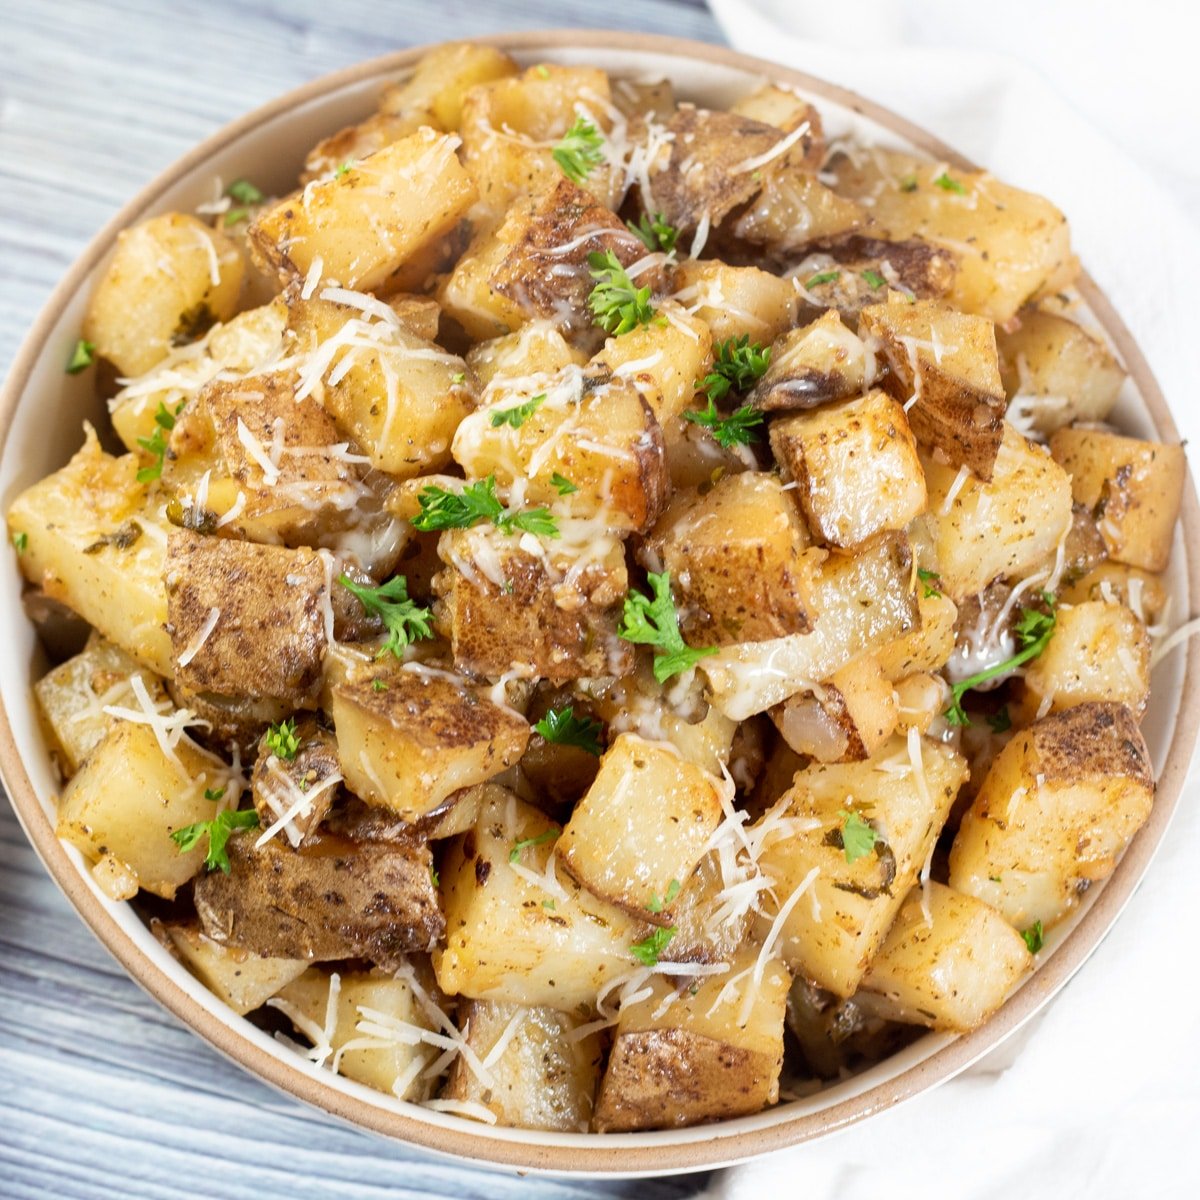 9+ Potatoes In Crockpot Recipe - LindseyMassoud